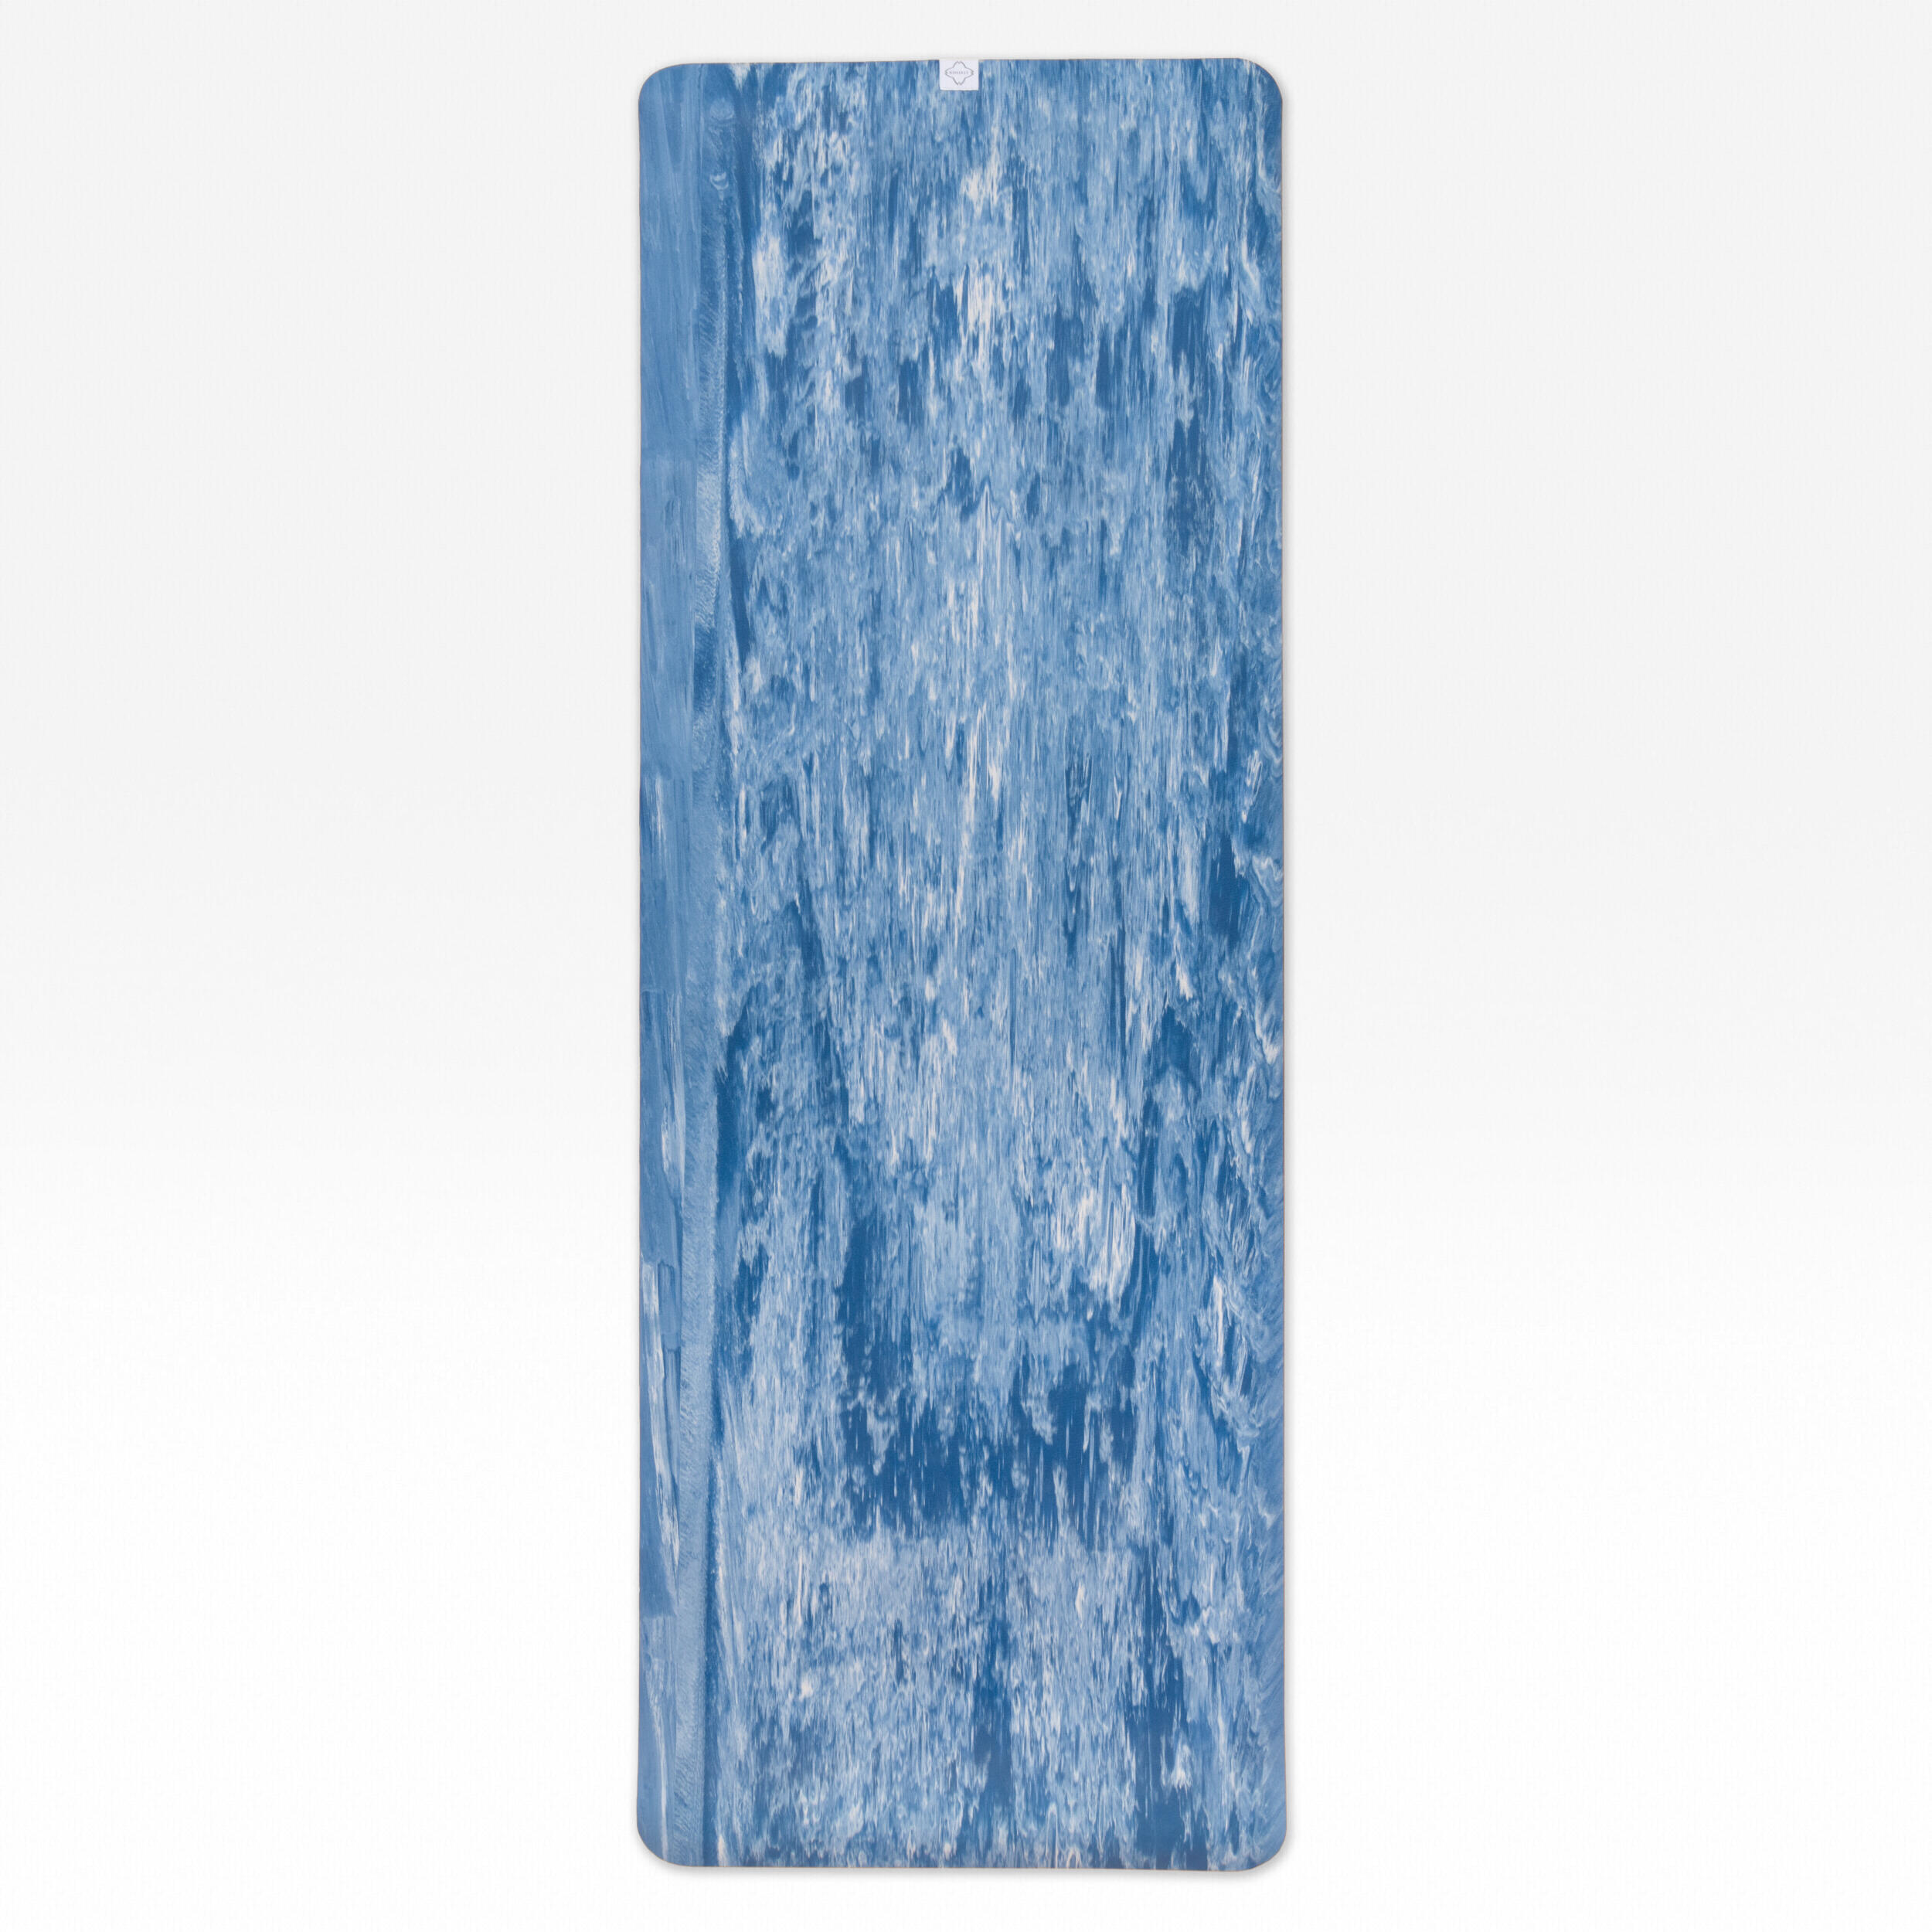 KIMJALY 185 cm x 65 cm x 5 mm Yoga Mat Grip - Blue